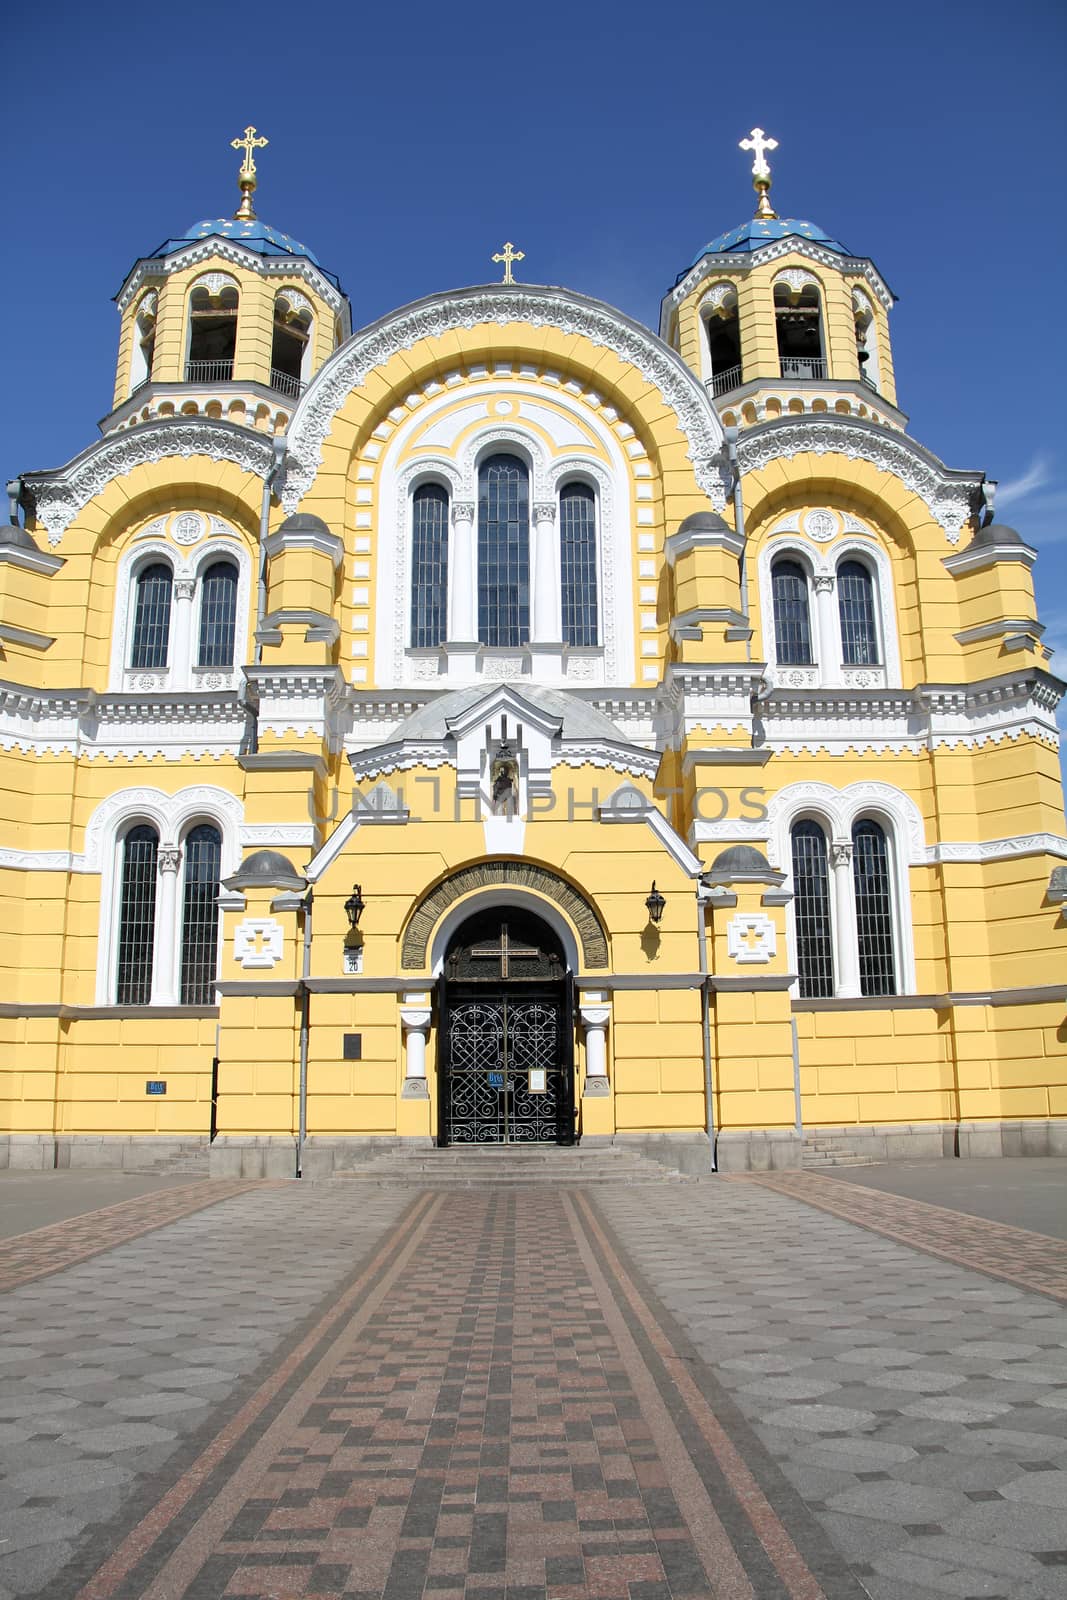 St. Vladimir Orthodox Church in Kiev, Ukraine